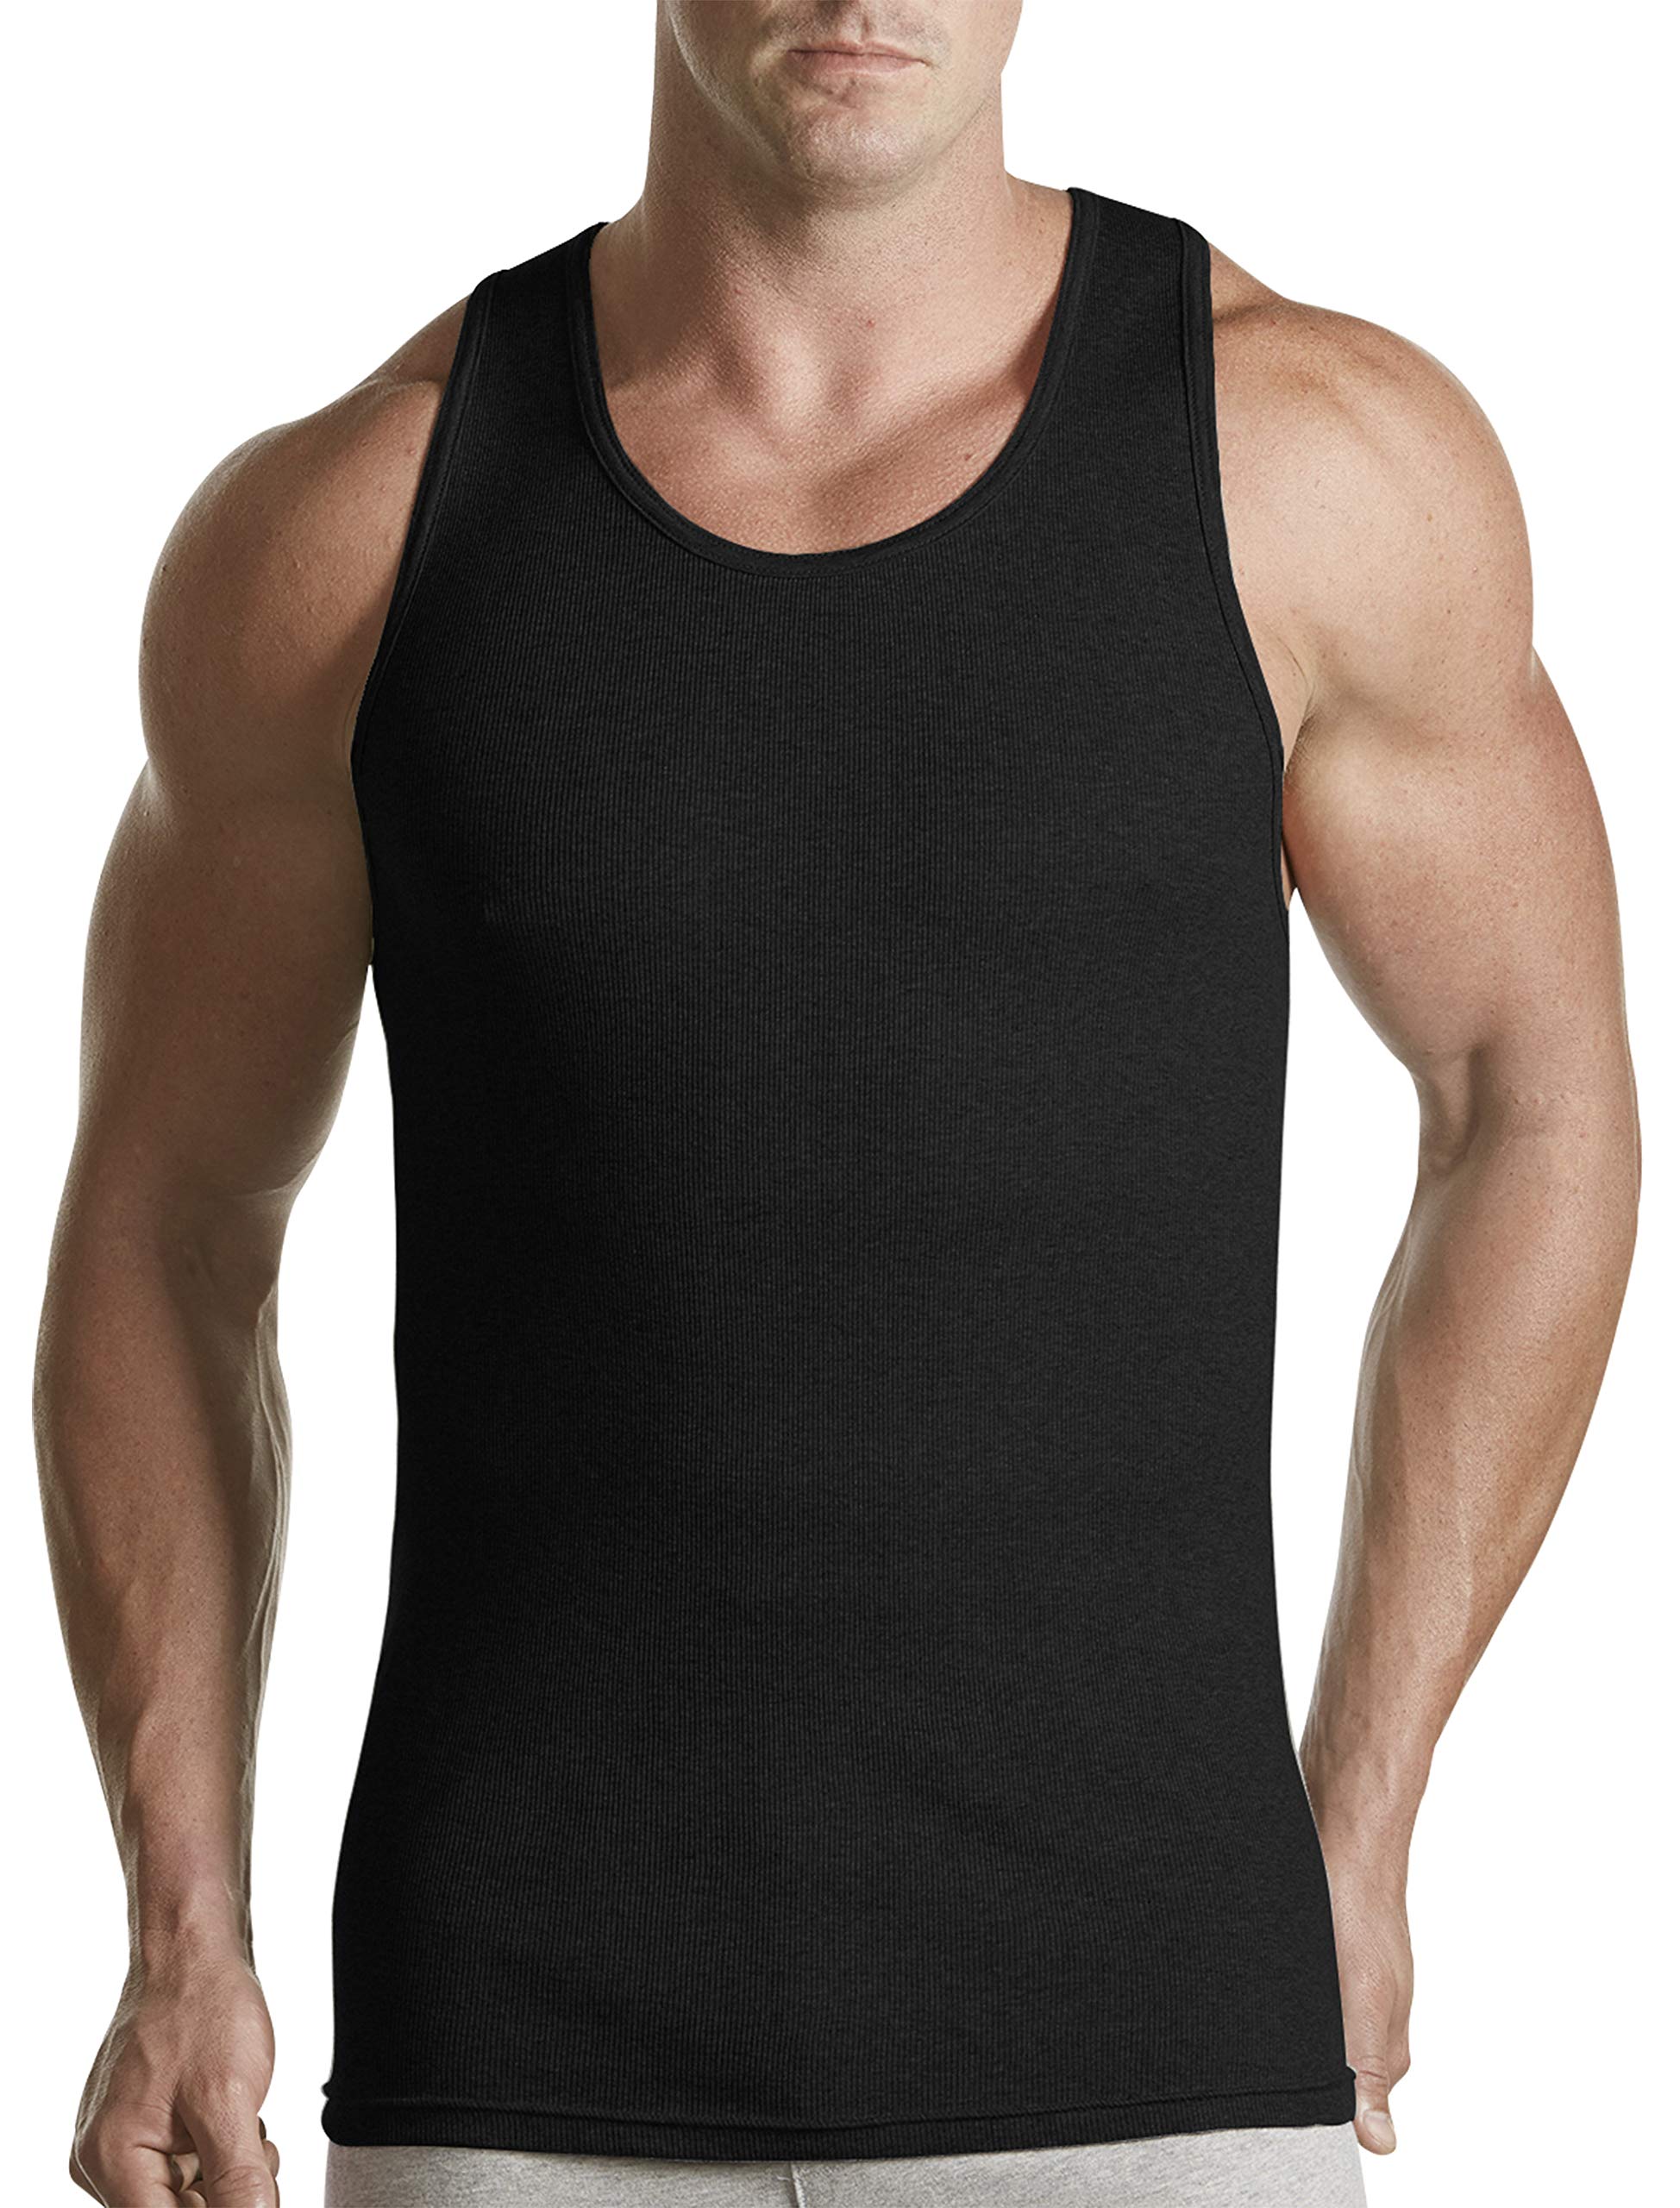 Harbor Bay by DXL Men's Big & Tall 3-pk Athletic T-Shirts | Tagless Undershirts in Longer Lengths, Machine Washable Black